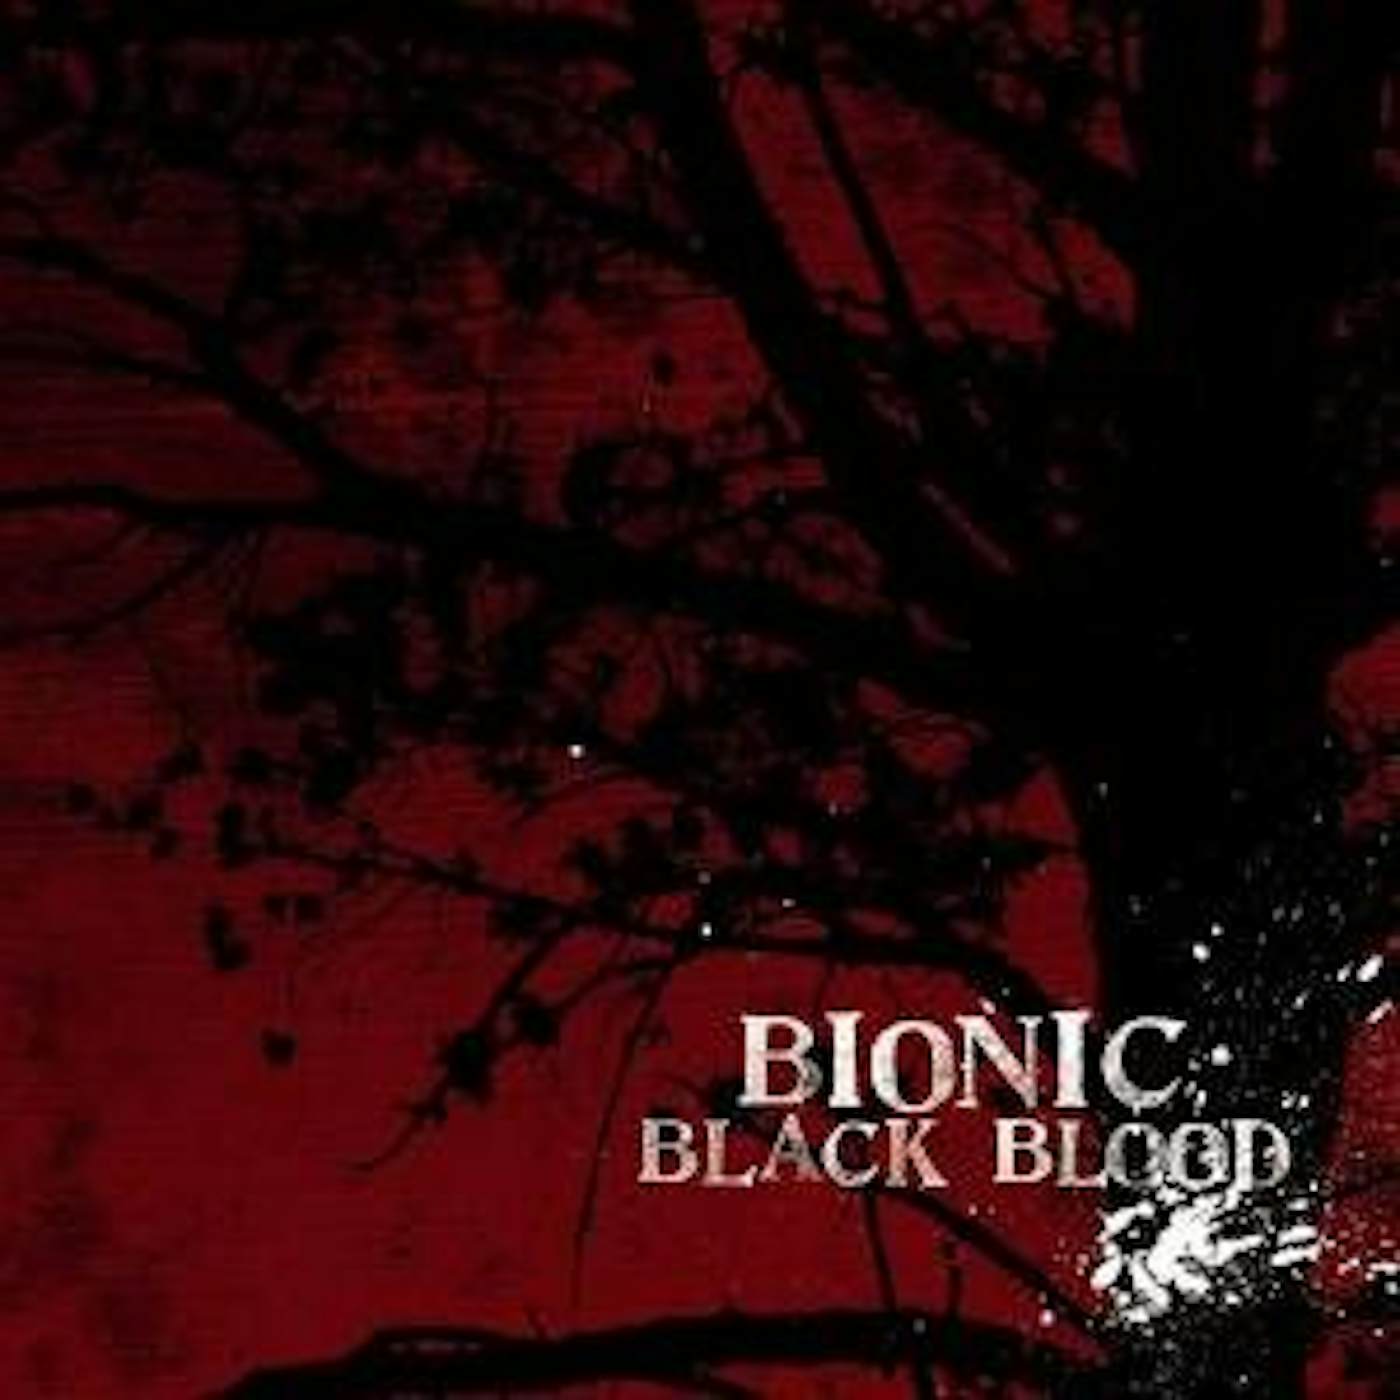 BIONIC BLACK BLOOD Vinyl Record - Digital Download Included, 180 Gram Pressing